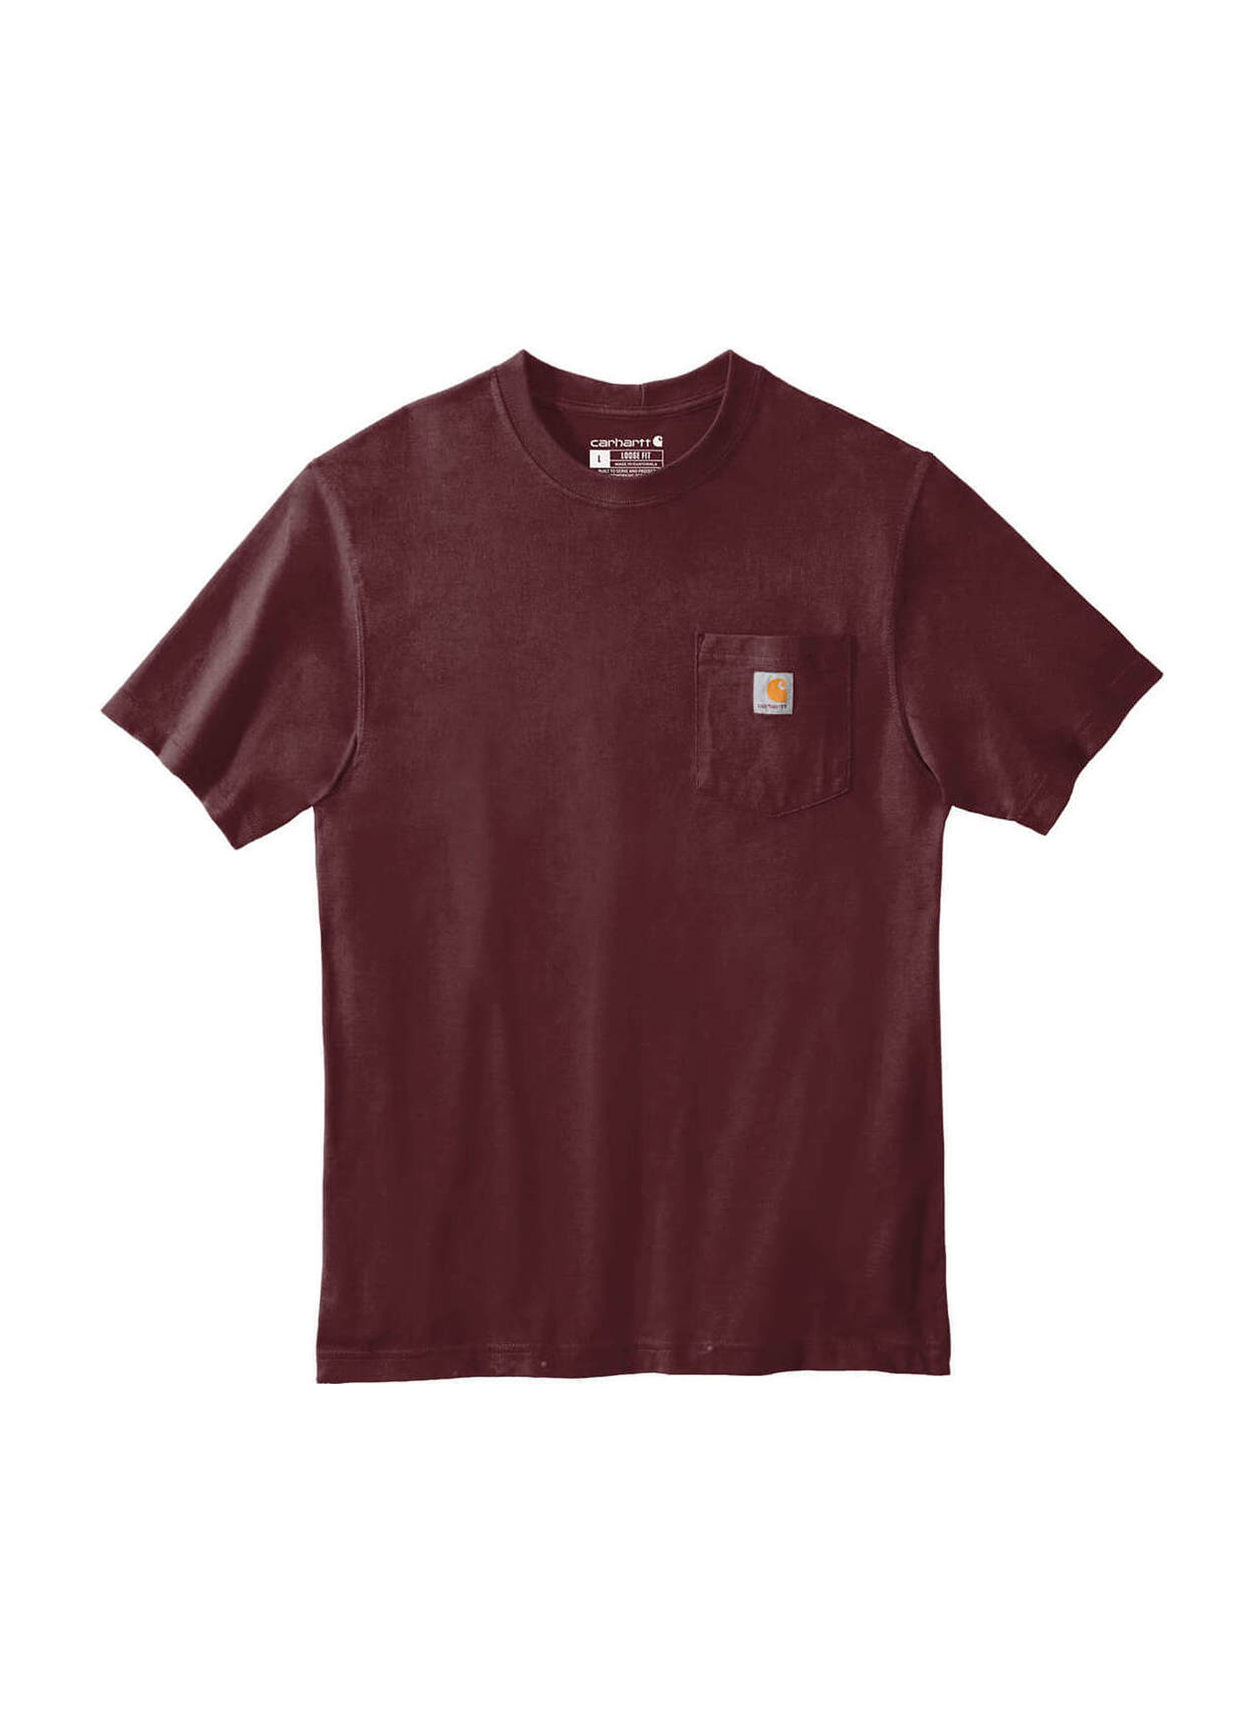 Carhartt Men's Port Workwear Pocket T-Shirt